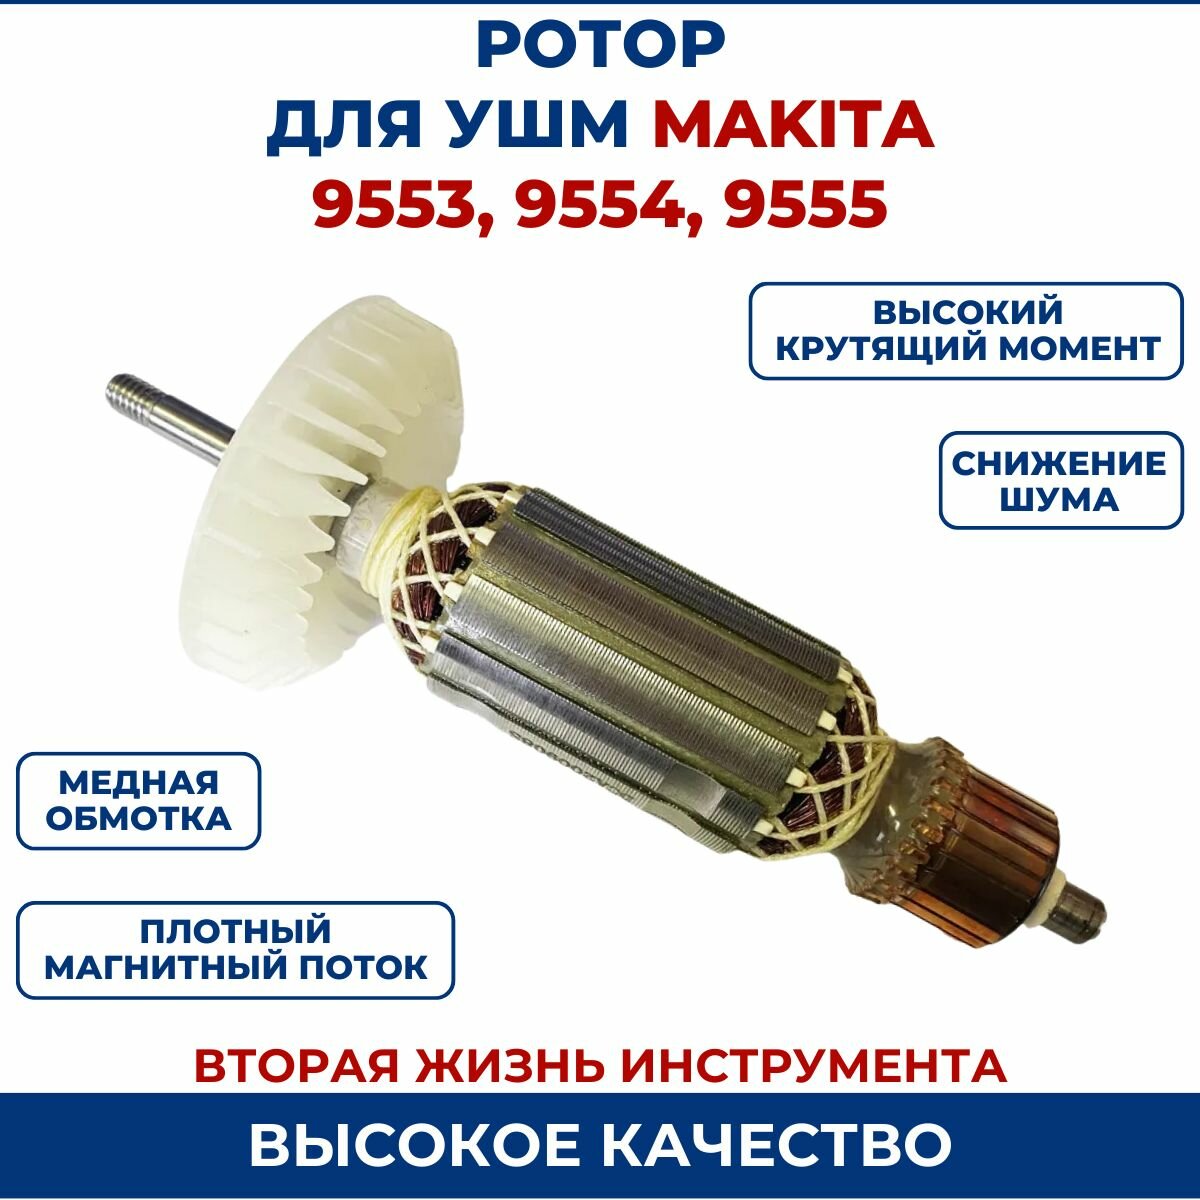 Ротор (якорь) для УШМ MAKITA 9554 9555 для болгарки.